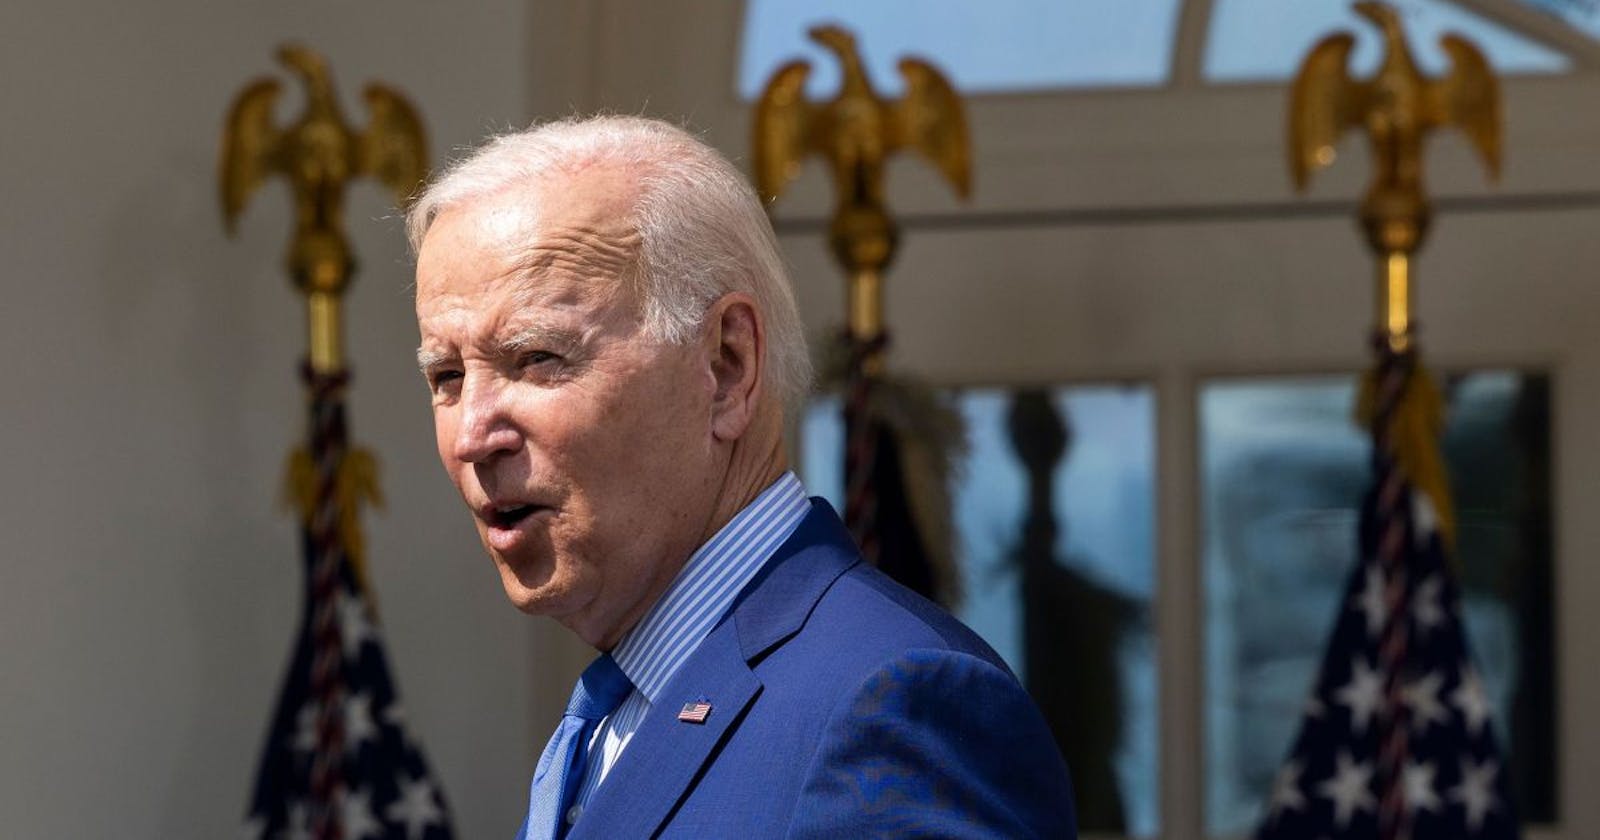 Joe Biden had not originally planned to make major news on Covid